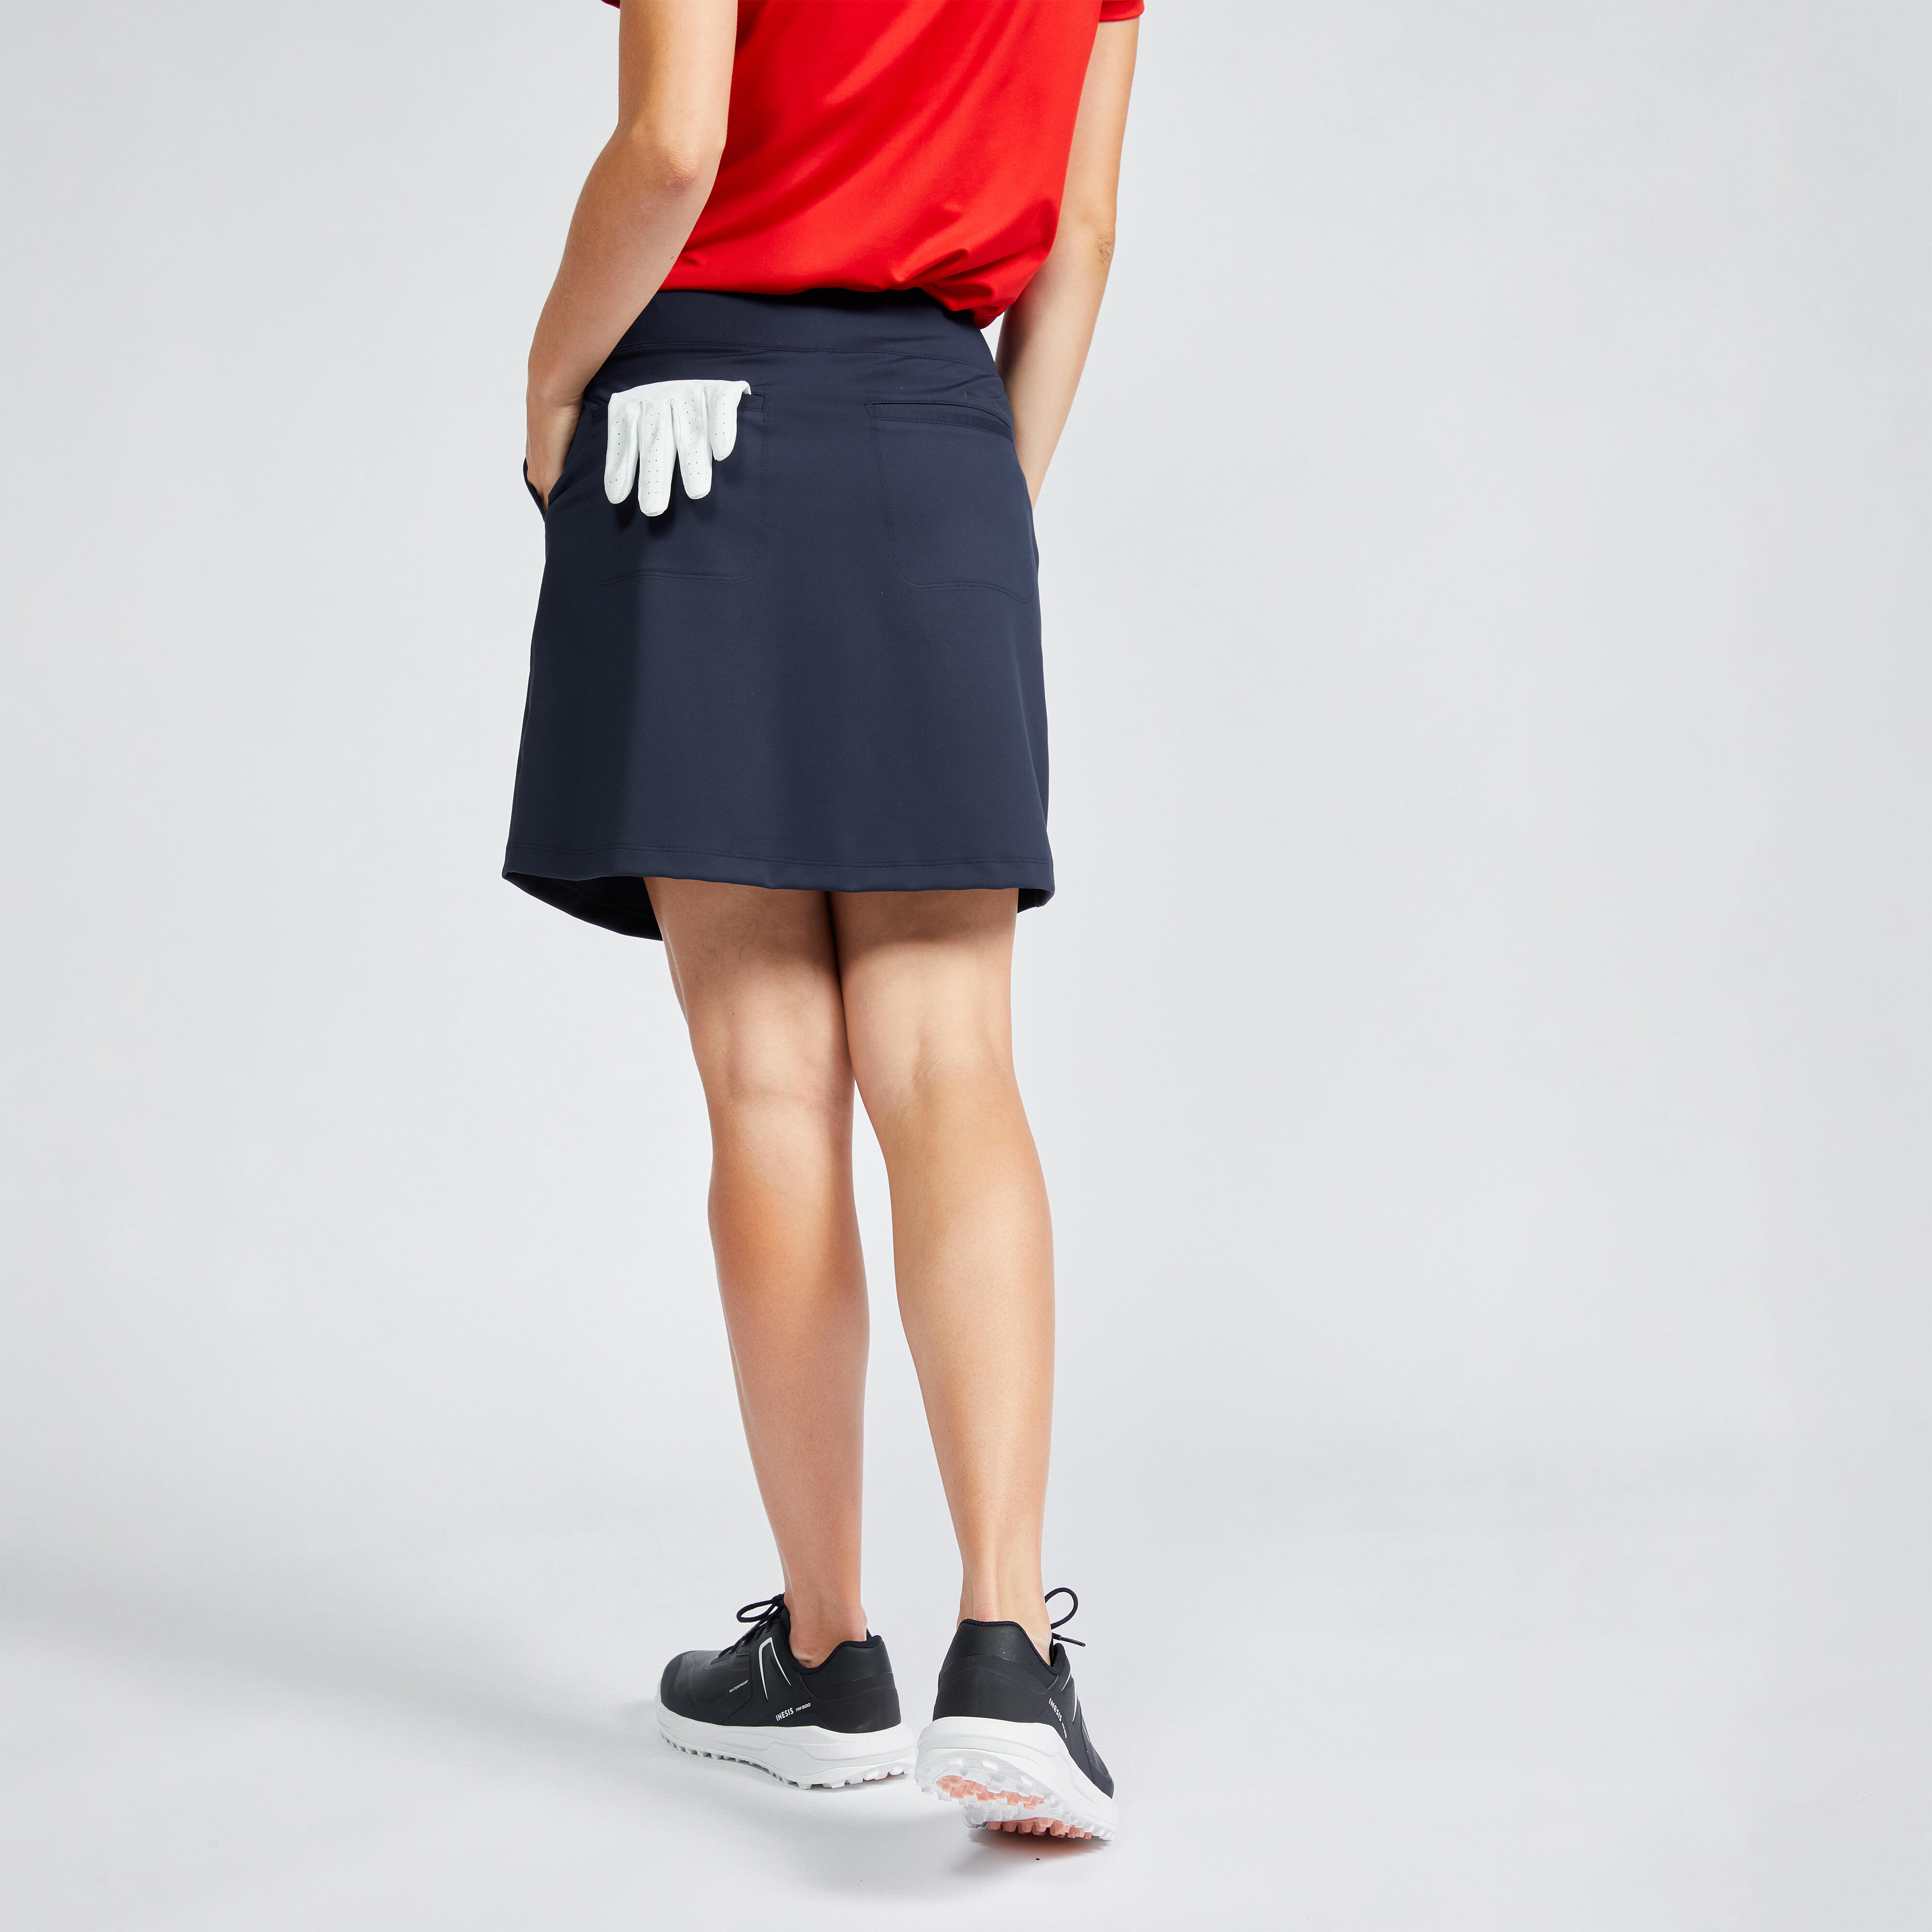 Bodychum 20” Tennis Skirt Golf Skorts Skirts for Women Adjustable  Drawstring Athletic Skirts with Pockets for Sports Running, Knee Length 